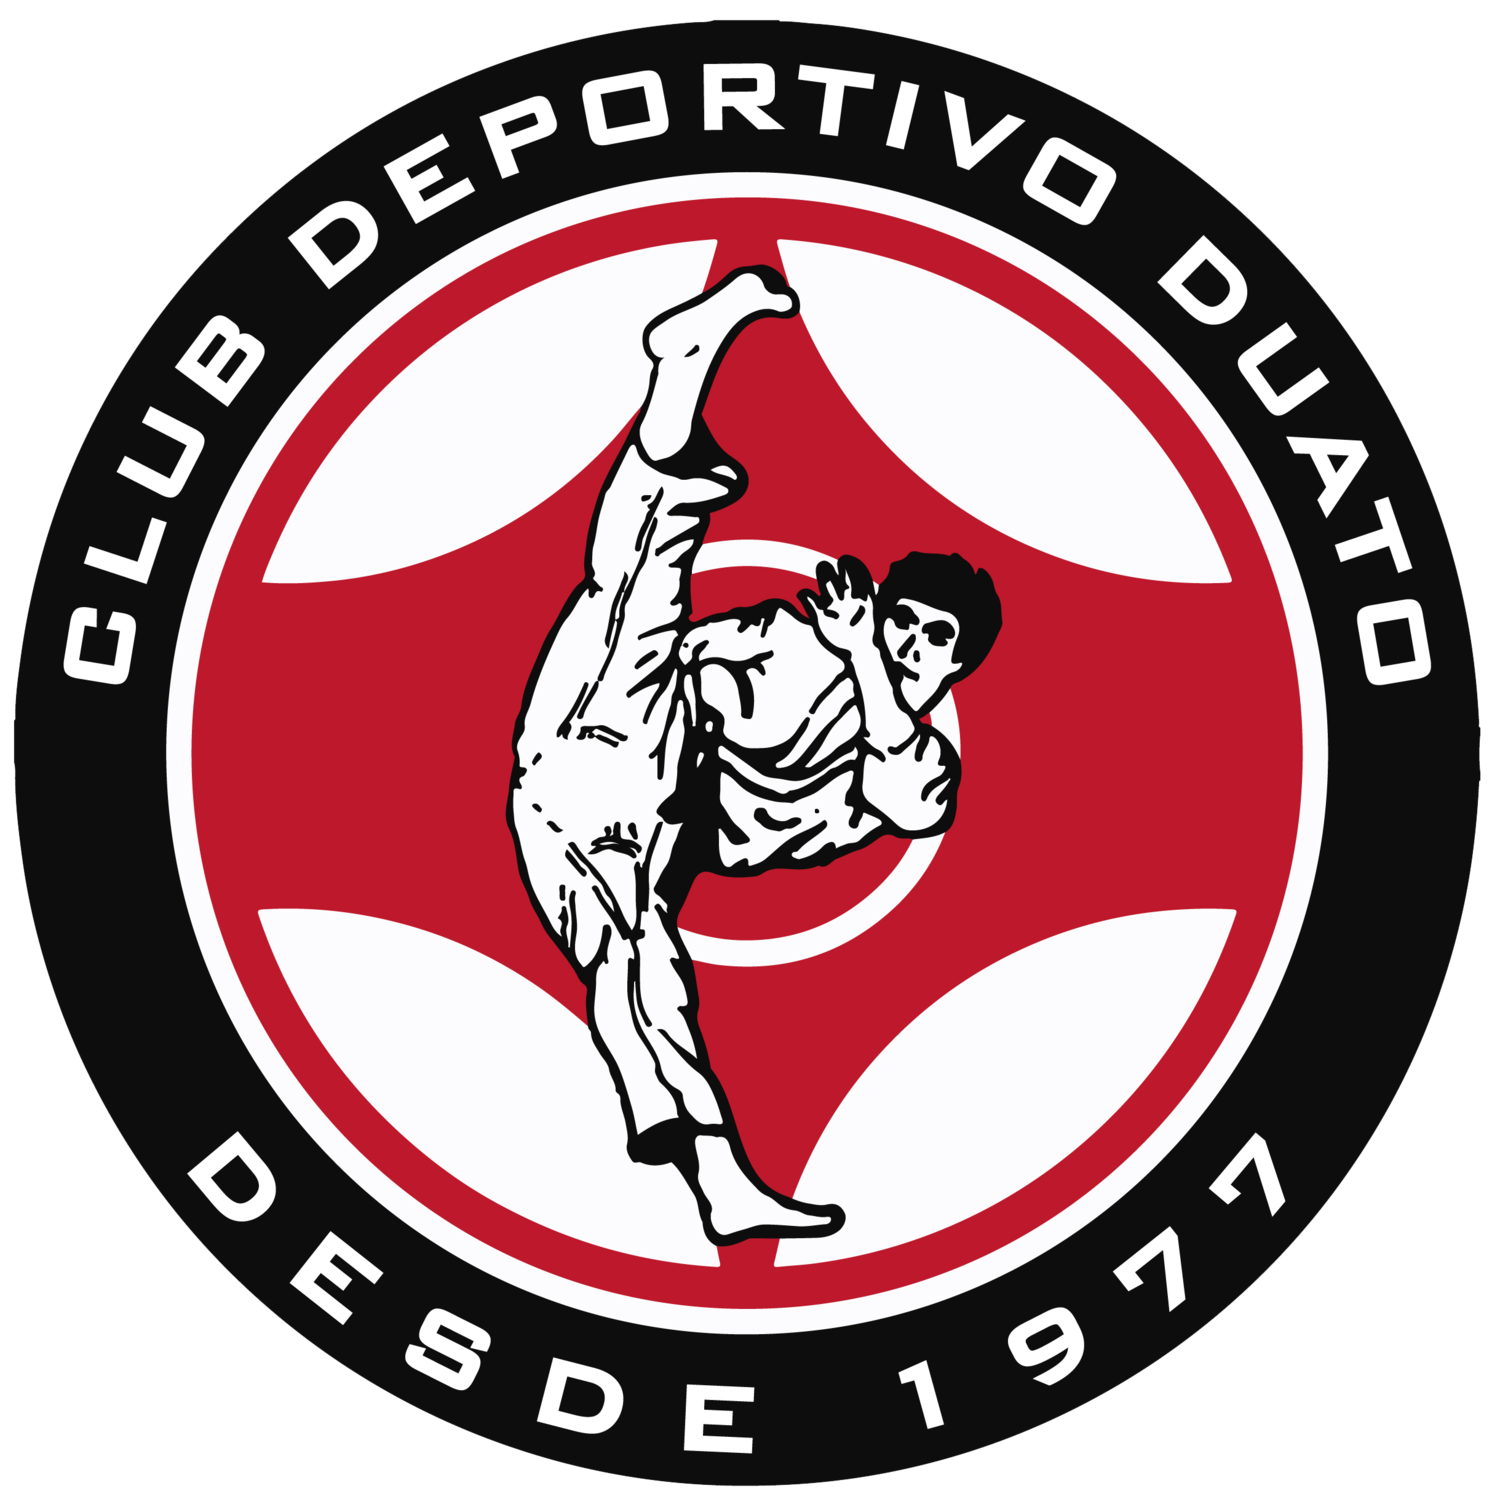 Club Deportivo Duato